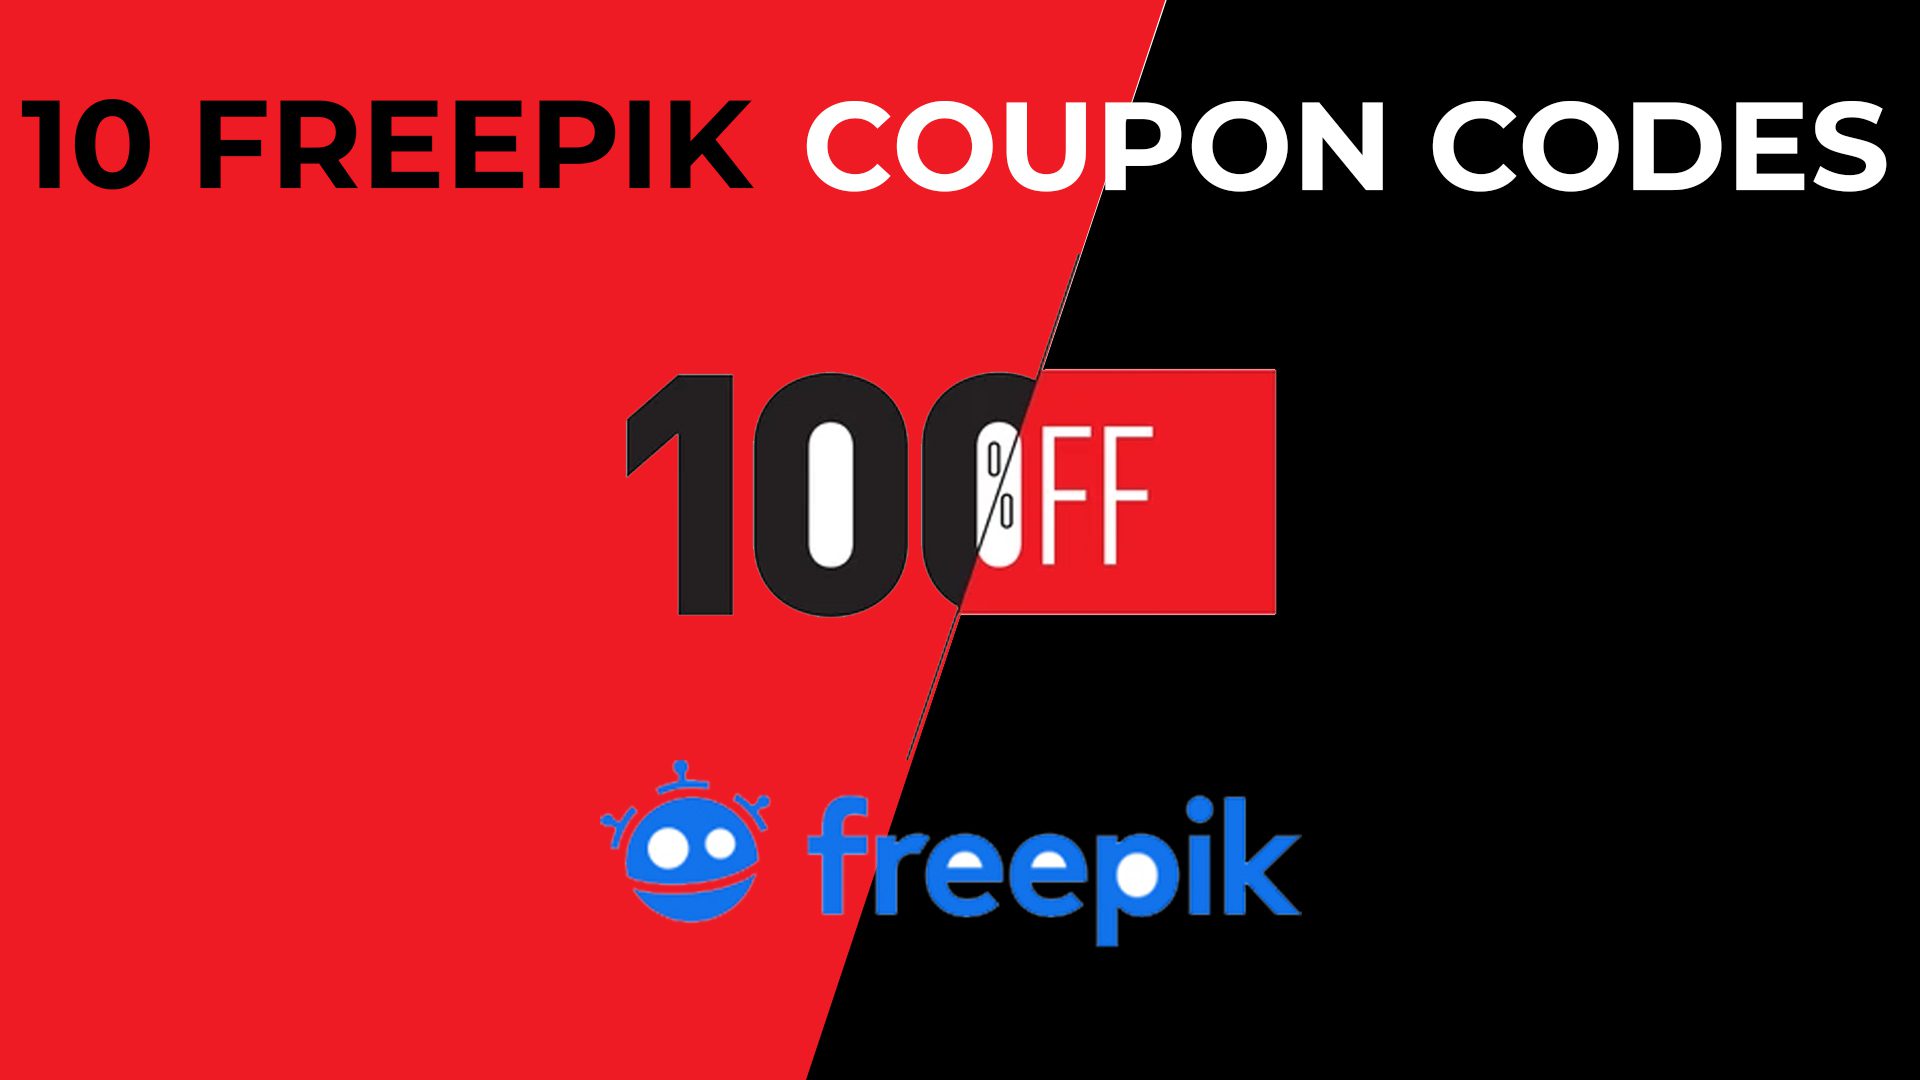 Freepik coupon